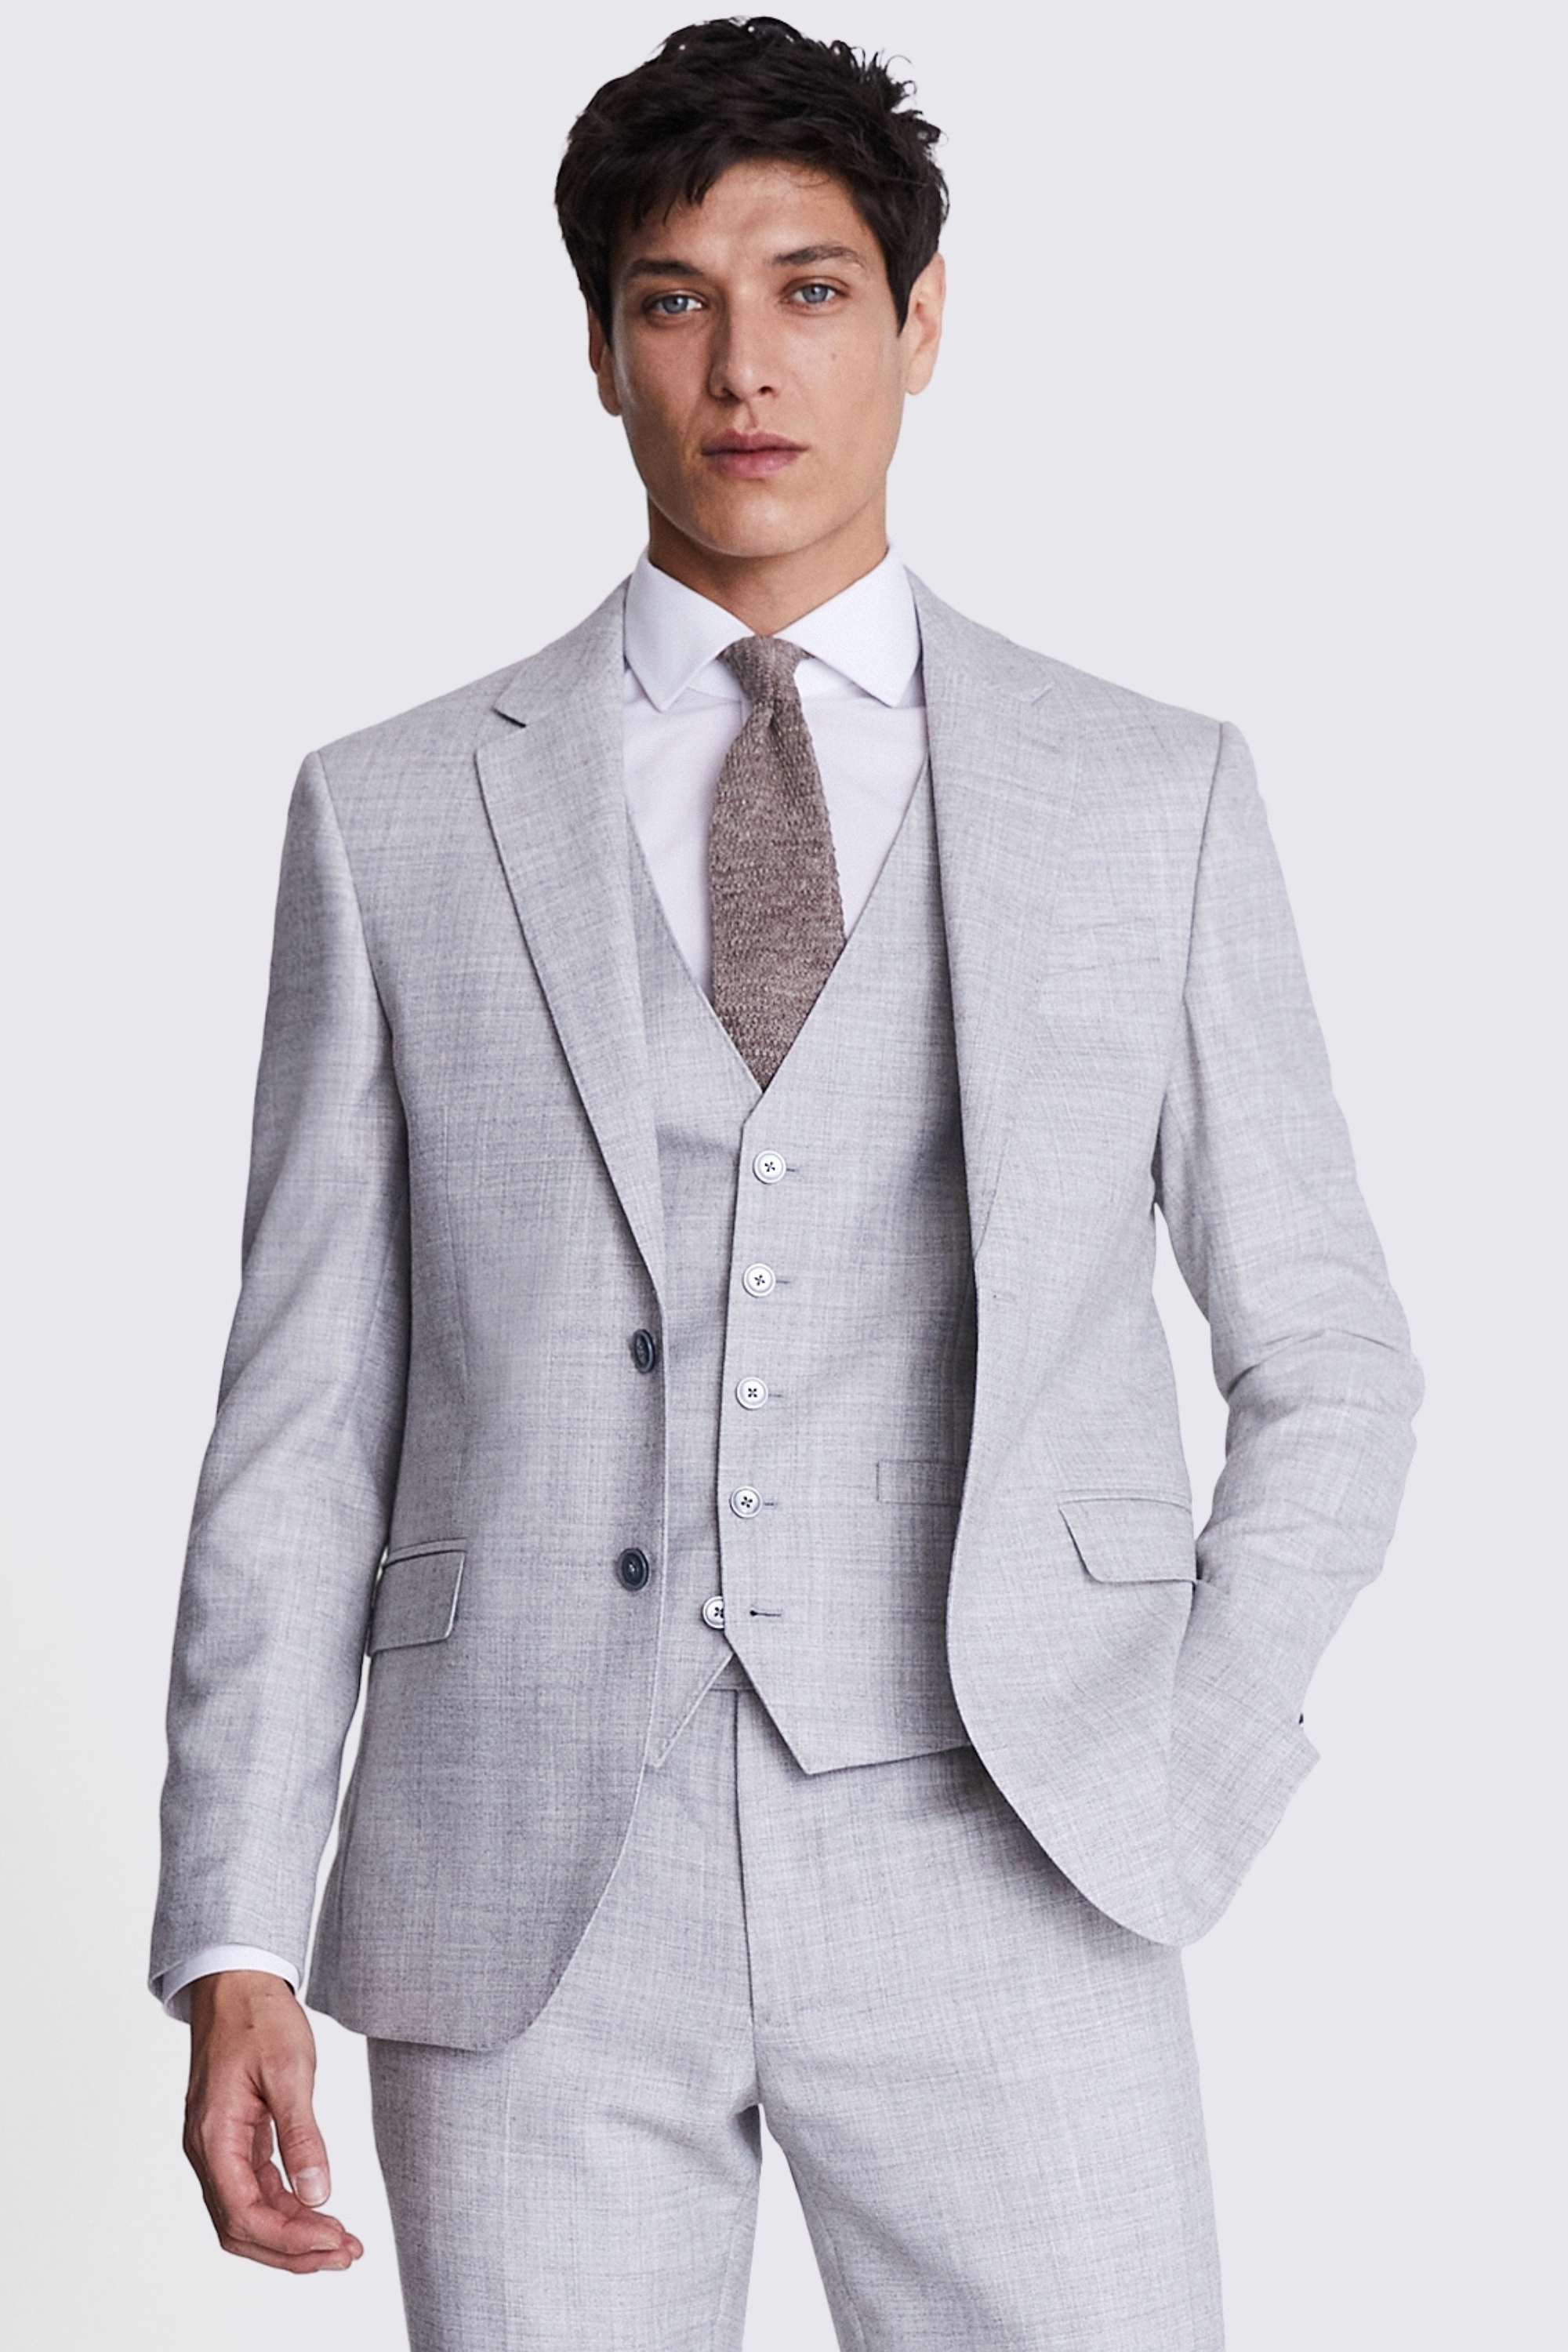 Slim Fit Light Grey Marl Jacket | Buy Online at Moss